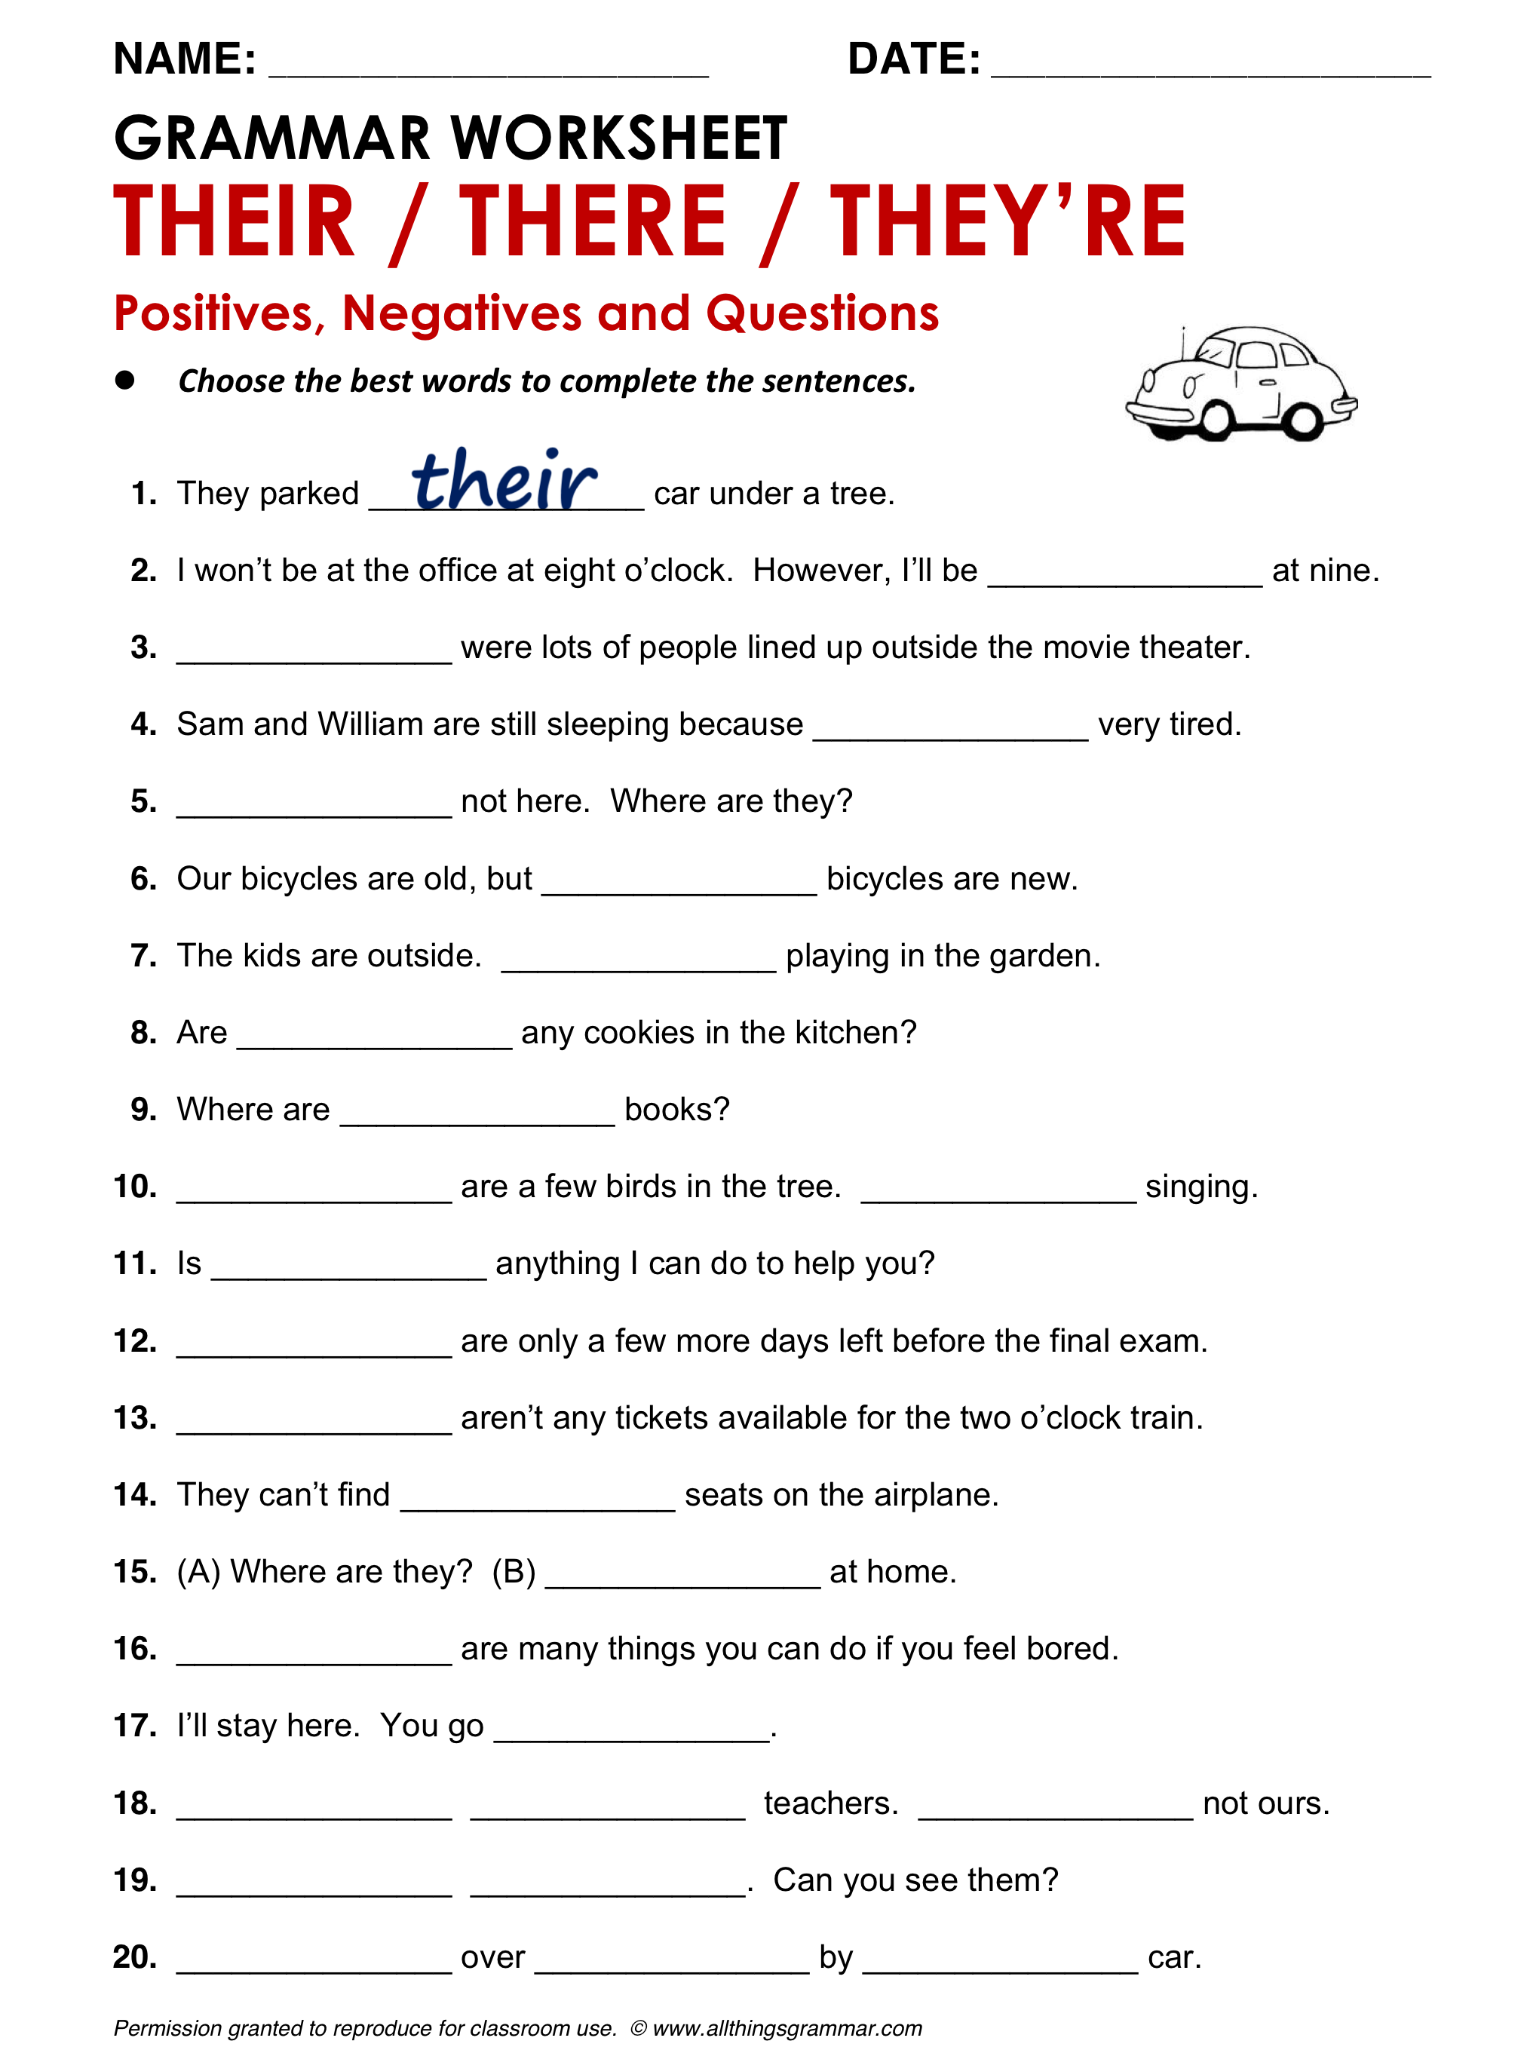 Grammar Worksheets For Middle School Students Worksheets Free Download